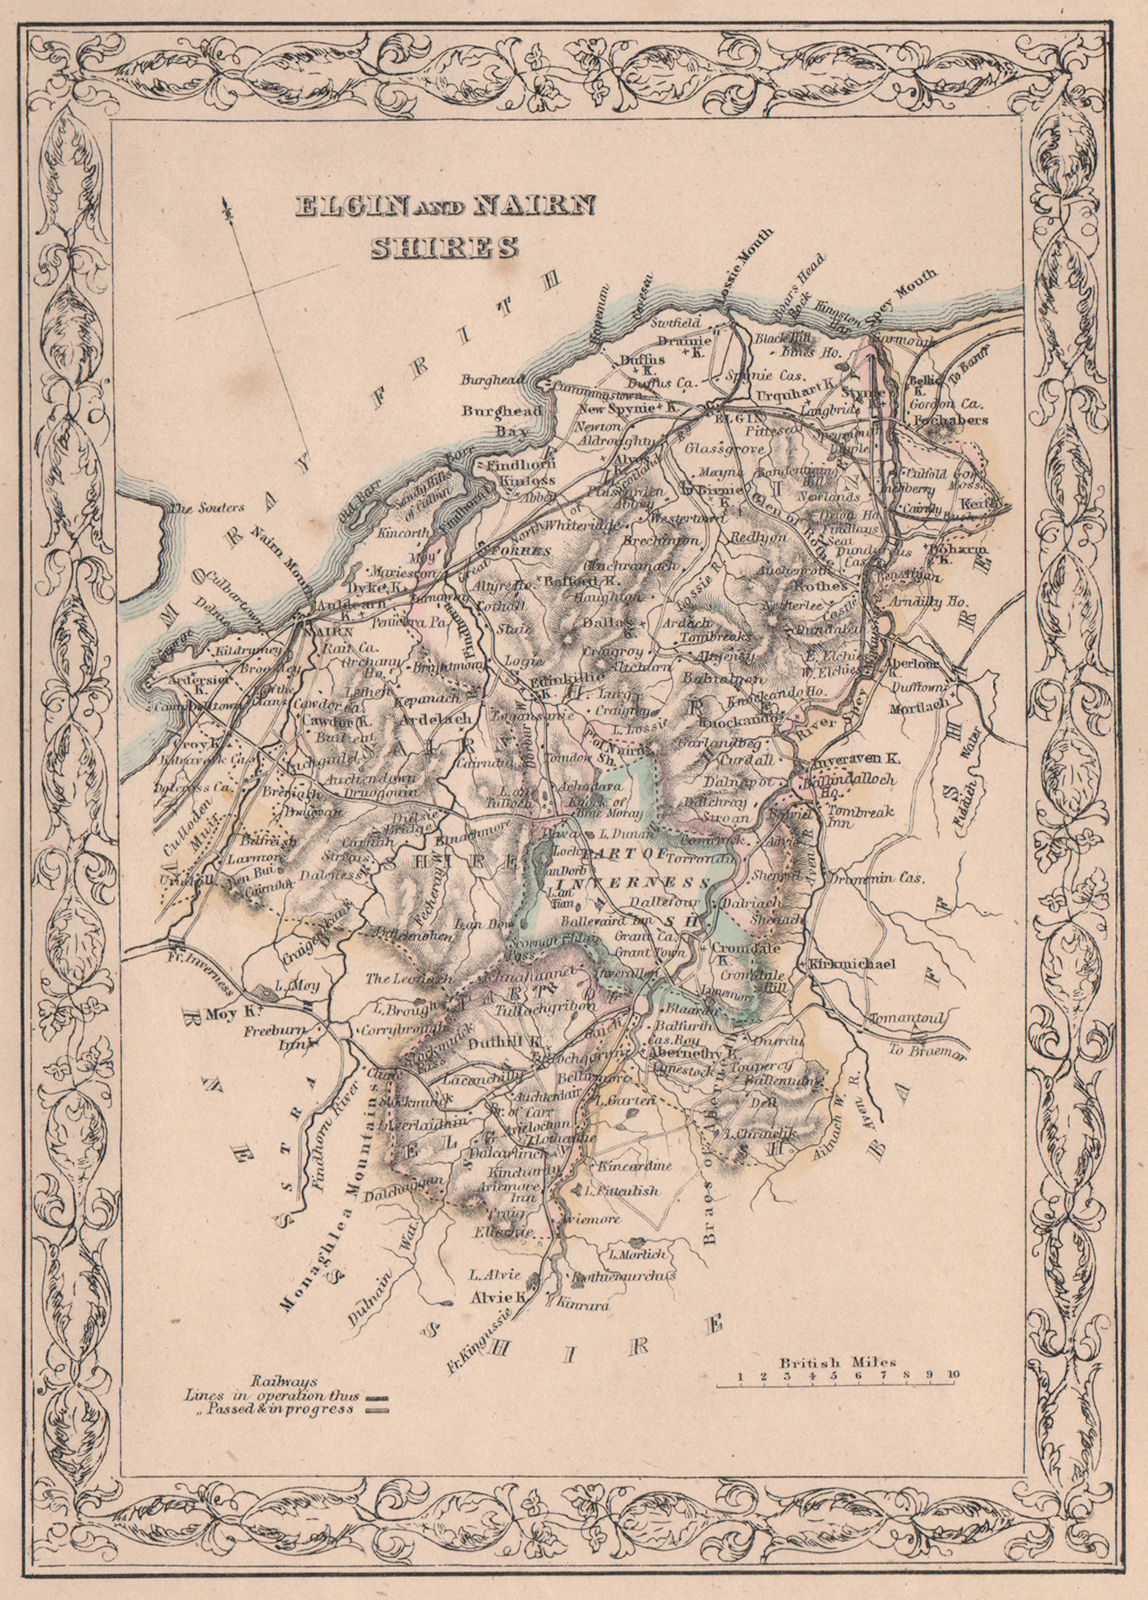 Associate Product Decorative antique county map of Elginshire & Nairnshire. FULLARTON 1868